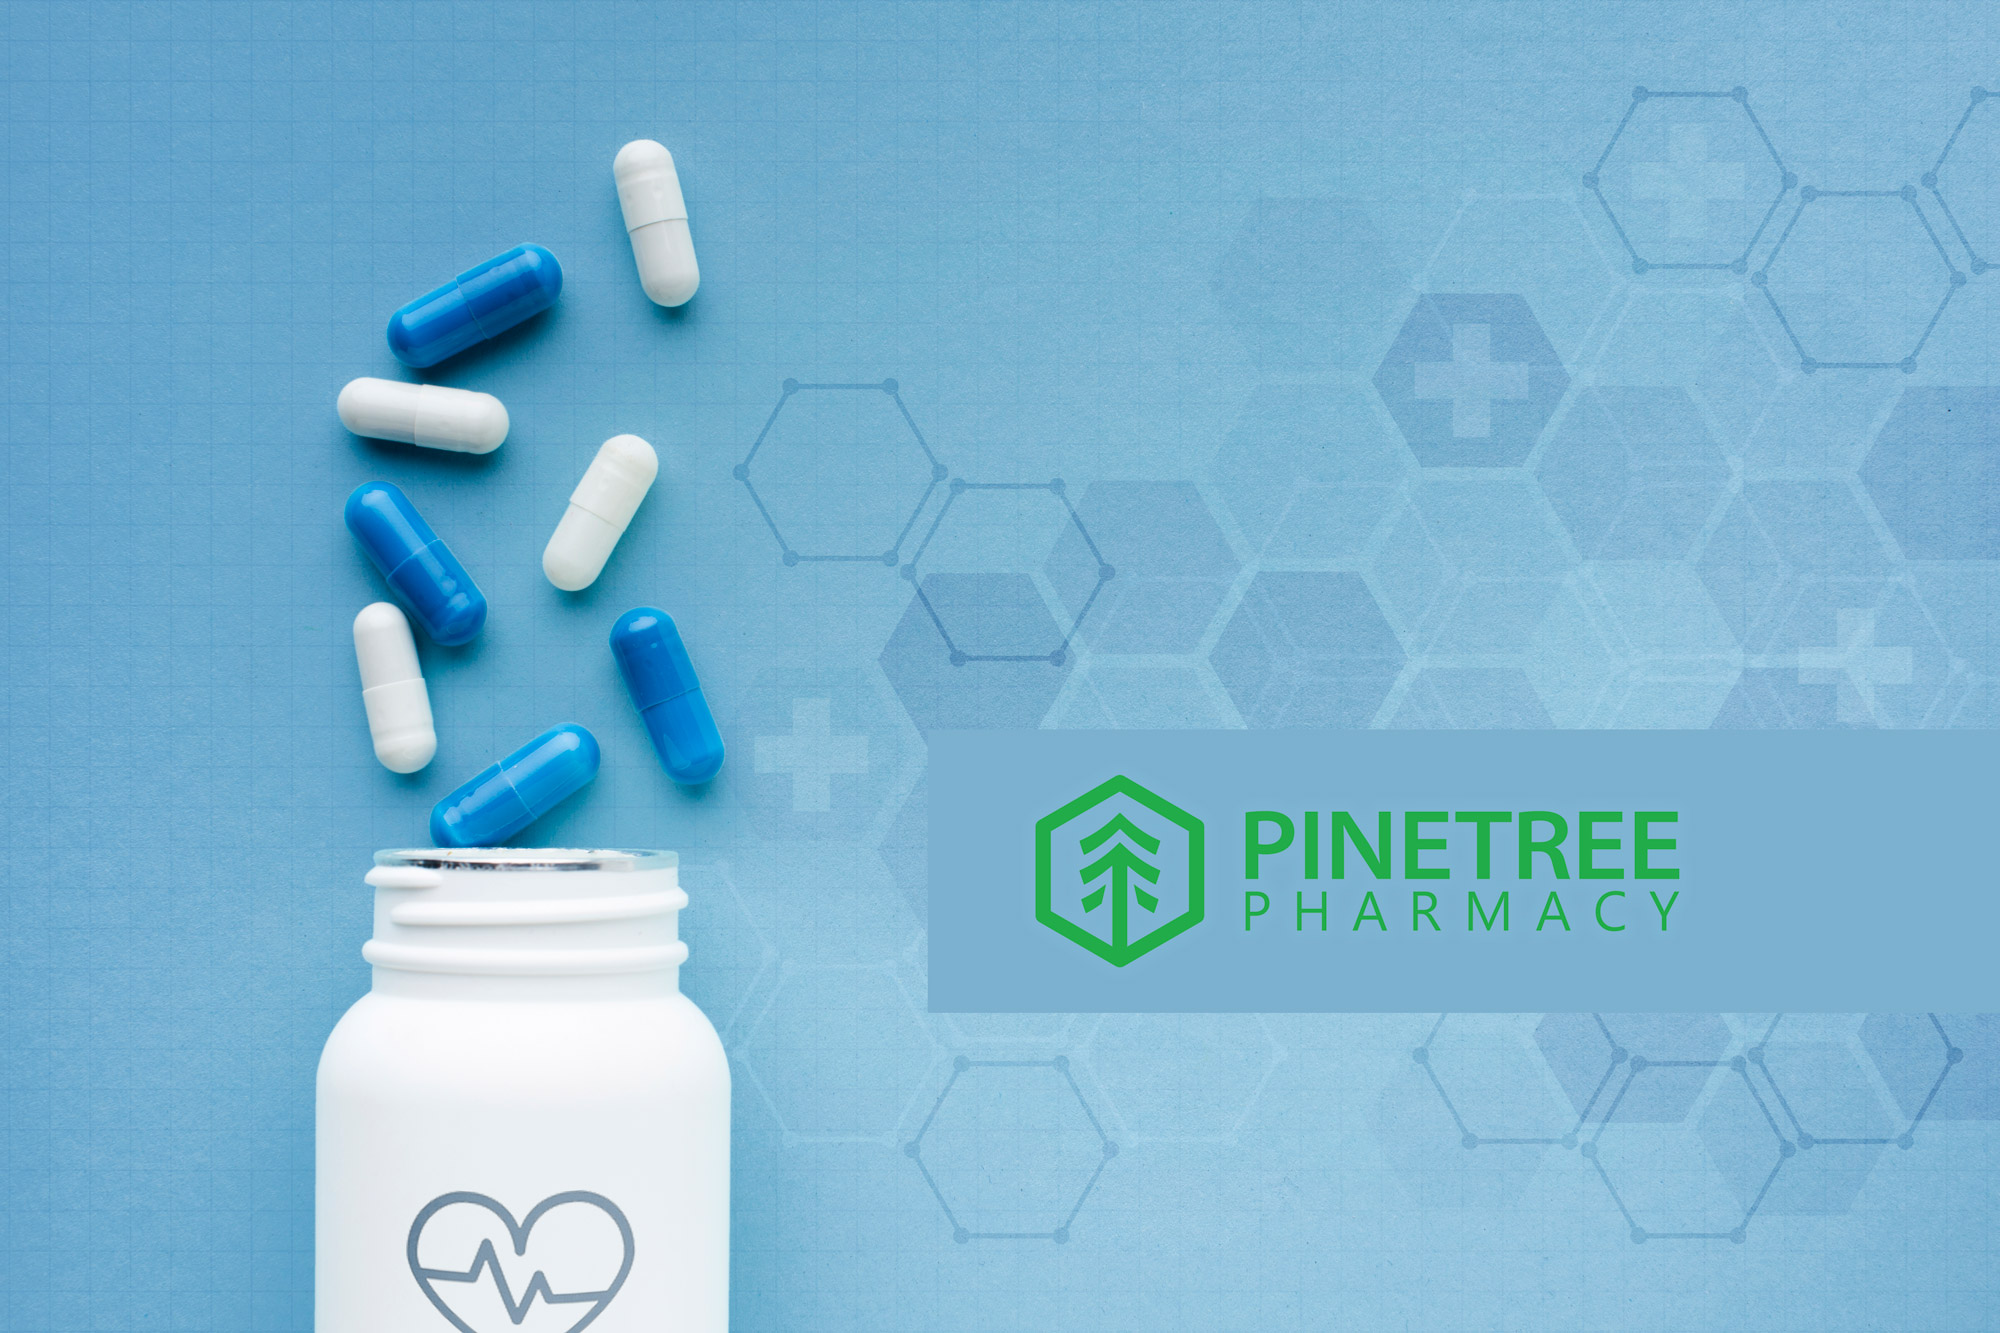 Pinetree Pharmacy Services